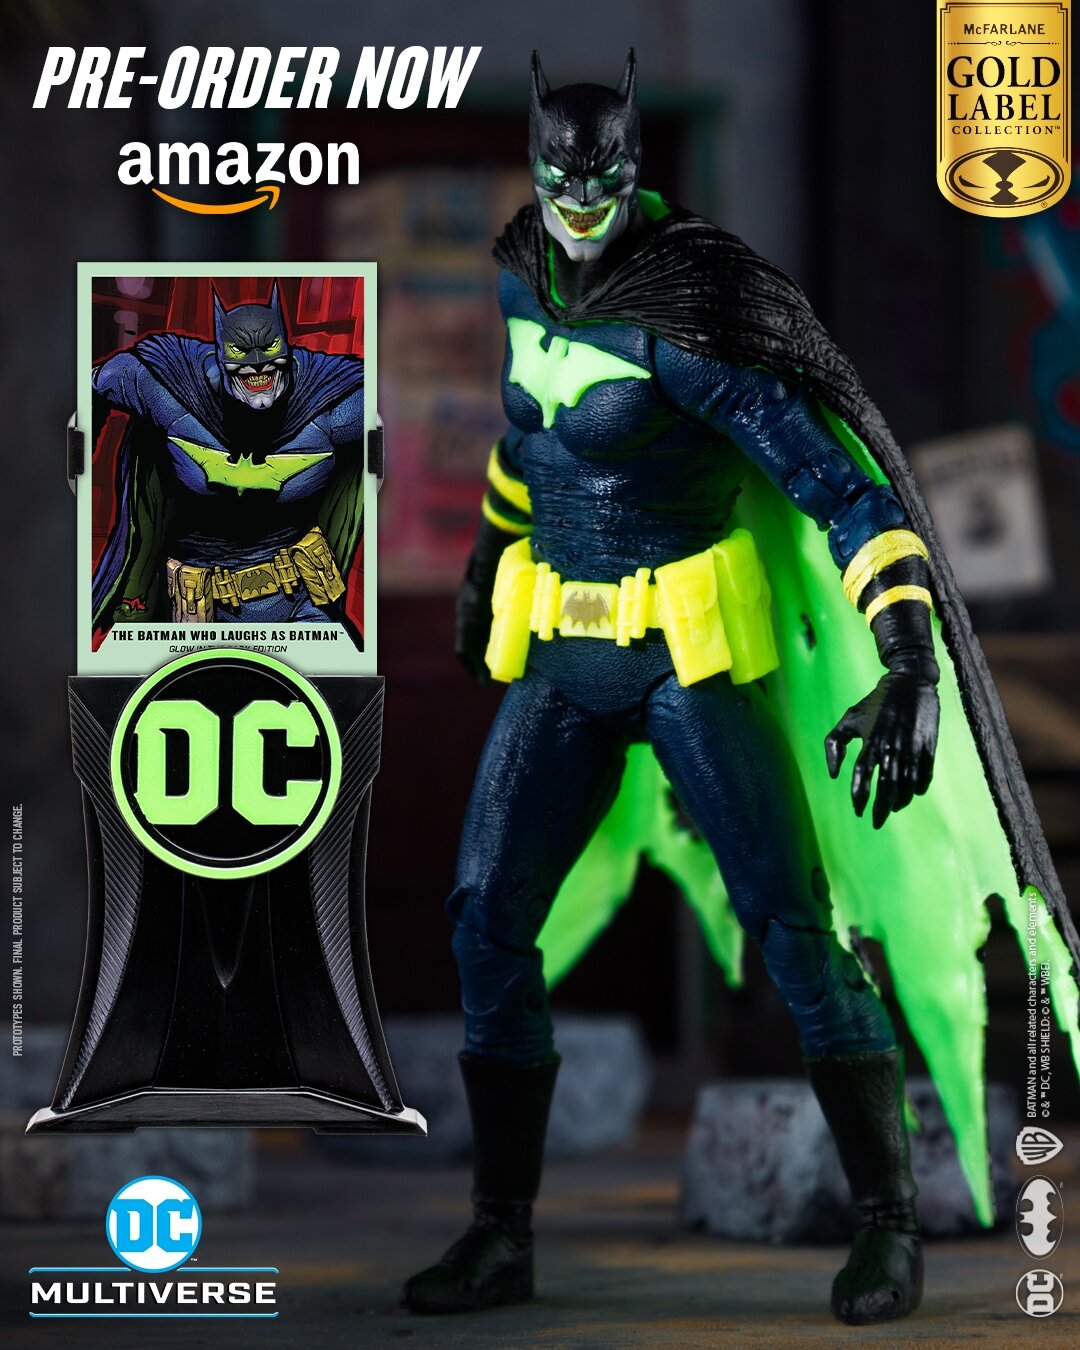 McFarlane-DC-Multiverse-Batman-of-Earth-22-Infected-Glow-In-The-Dark-Edition-Gold-Label-Amazon-Exclusive.jpg.ec60c88e797779c8333cefcbfc195243.jpg